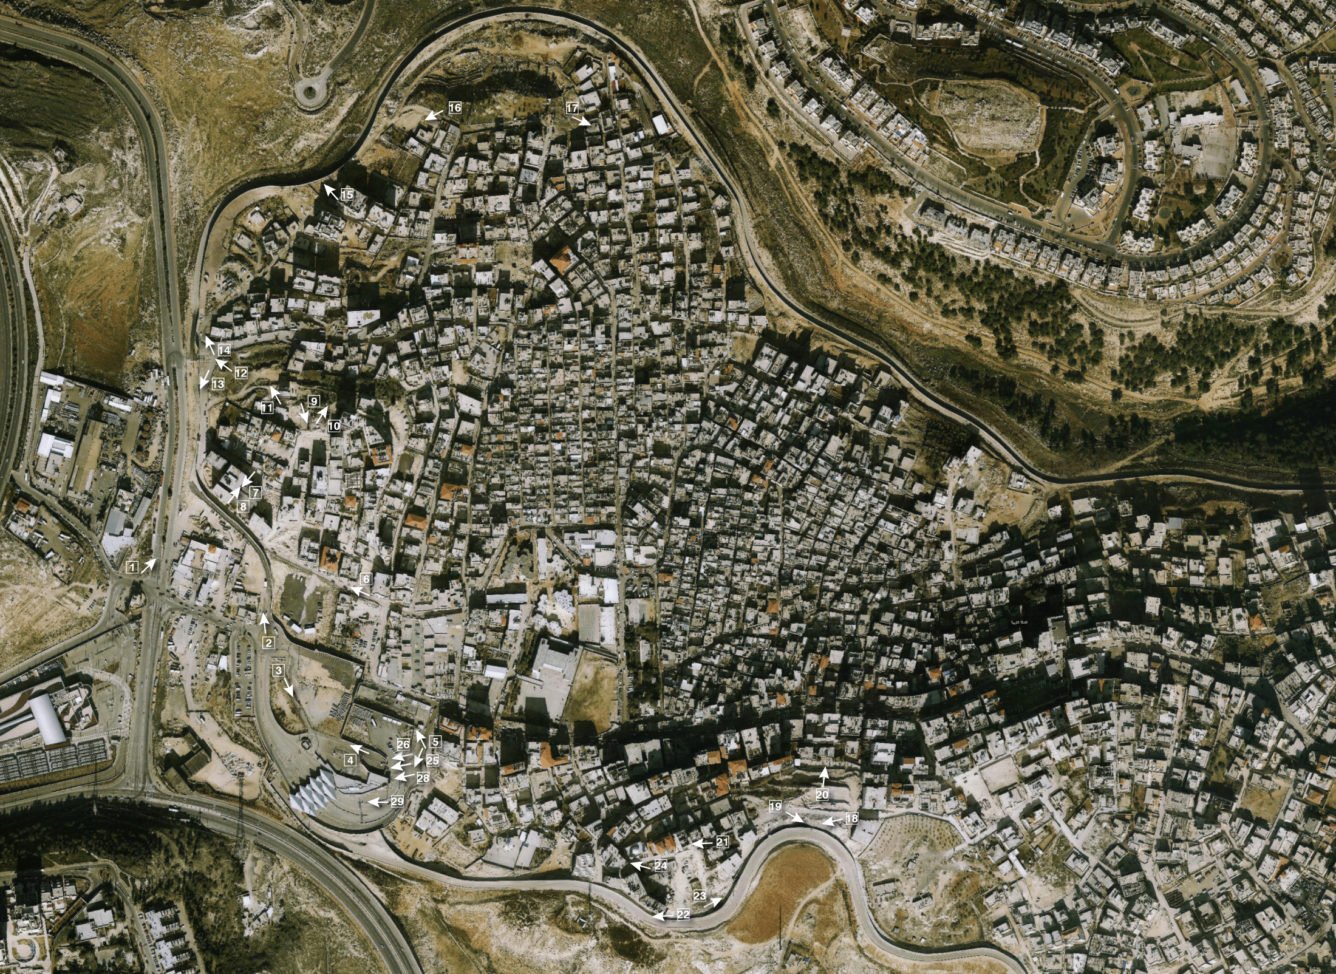 The walled refugee camp of Shu‘fat in Jerusalem